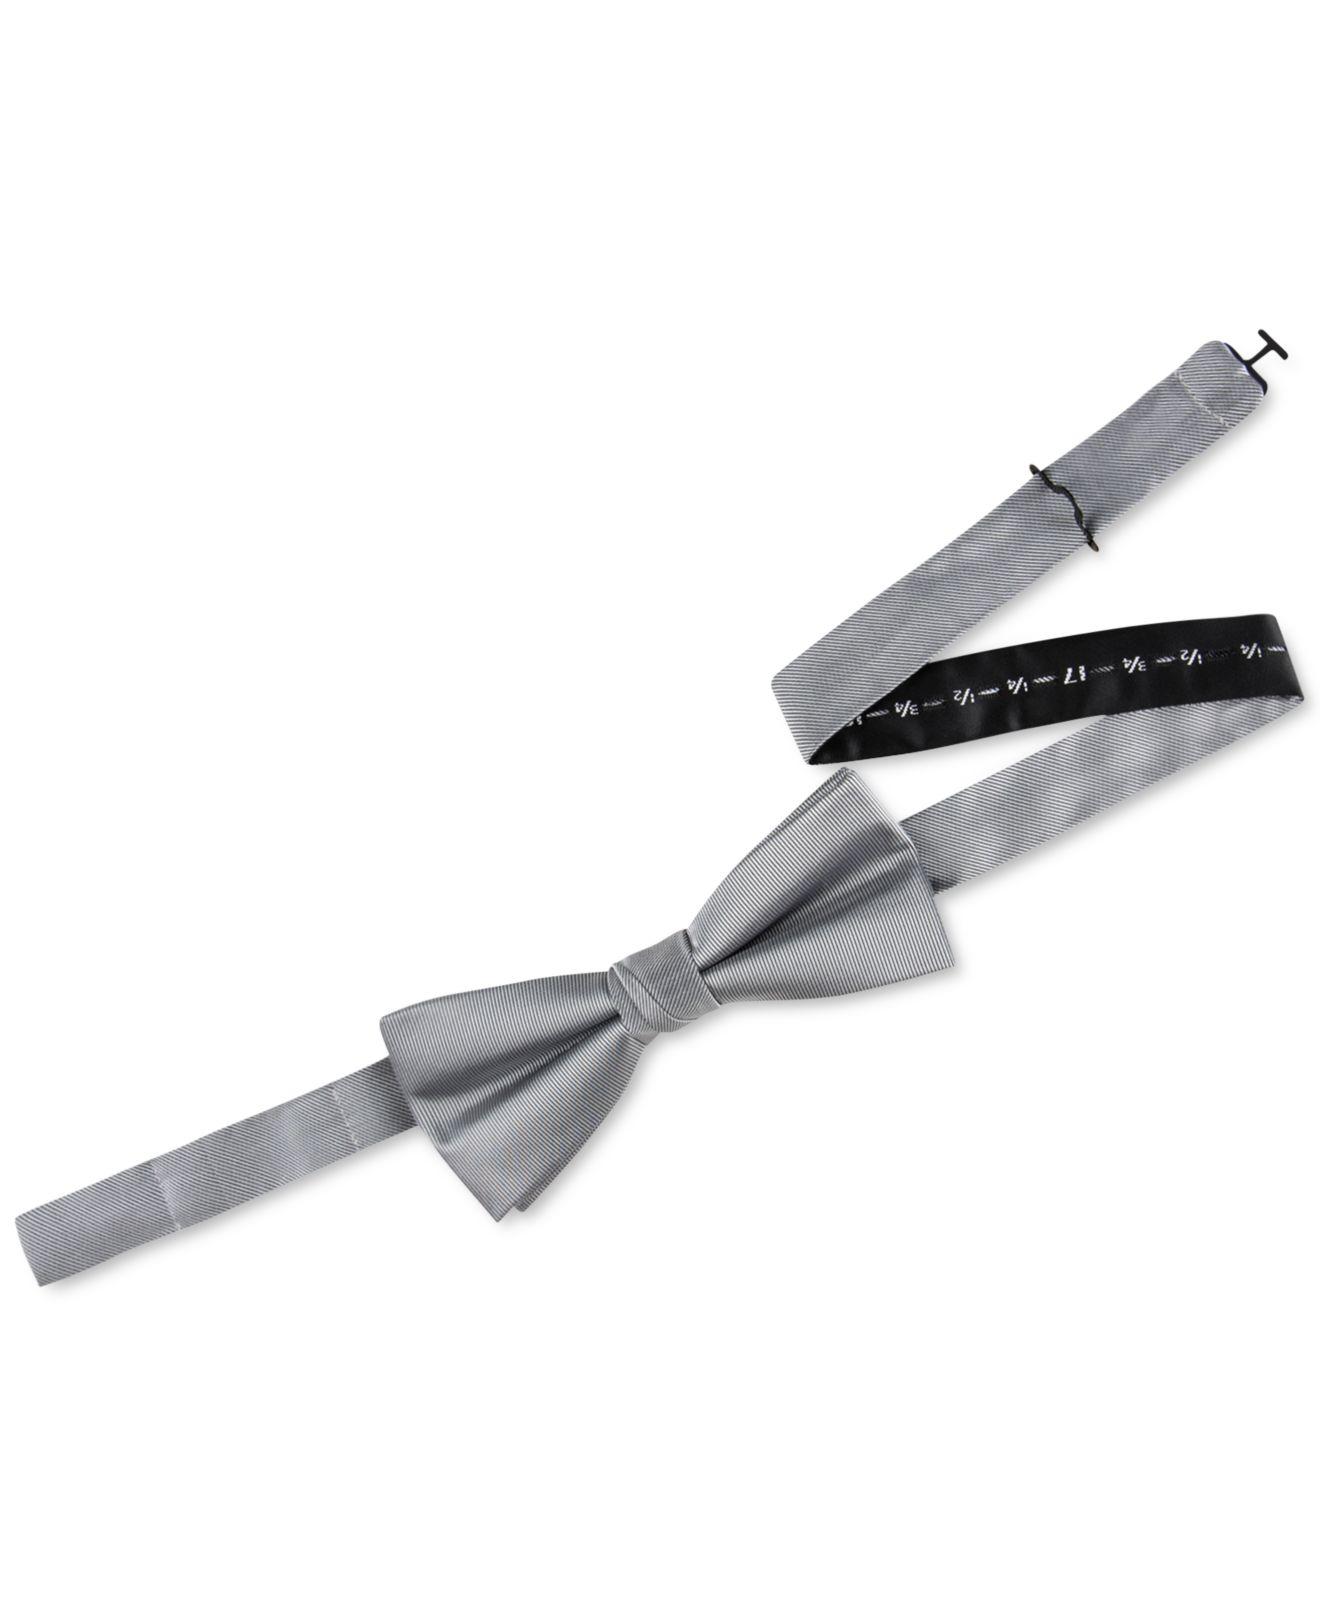 Calvin Klein Unison Solid Pre-tied Bow Tie in Gray for Men | Lyst